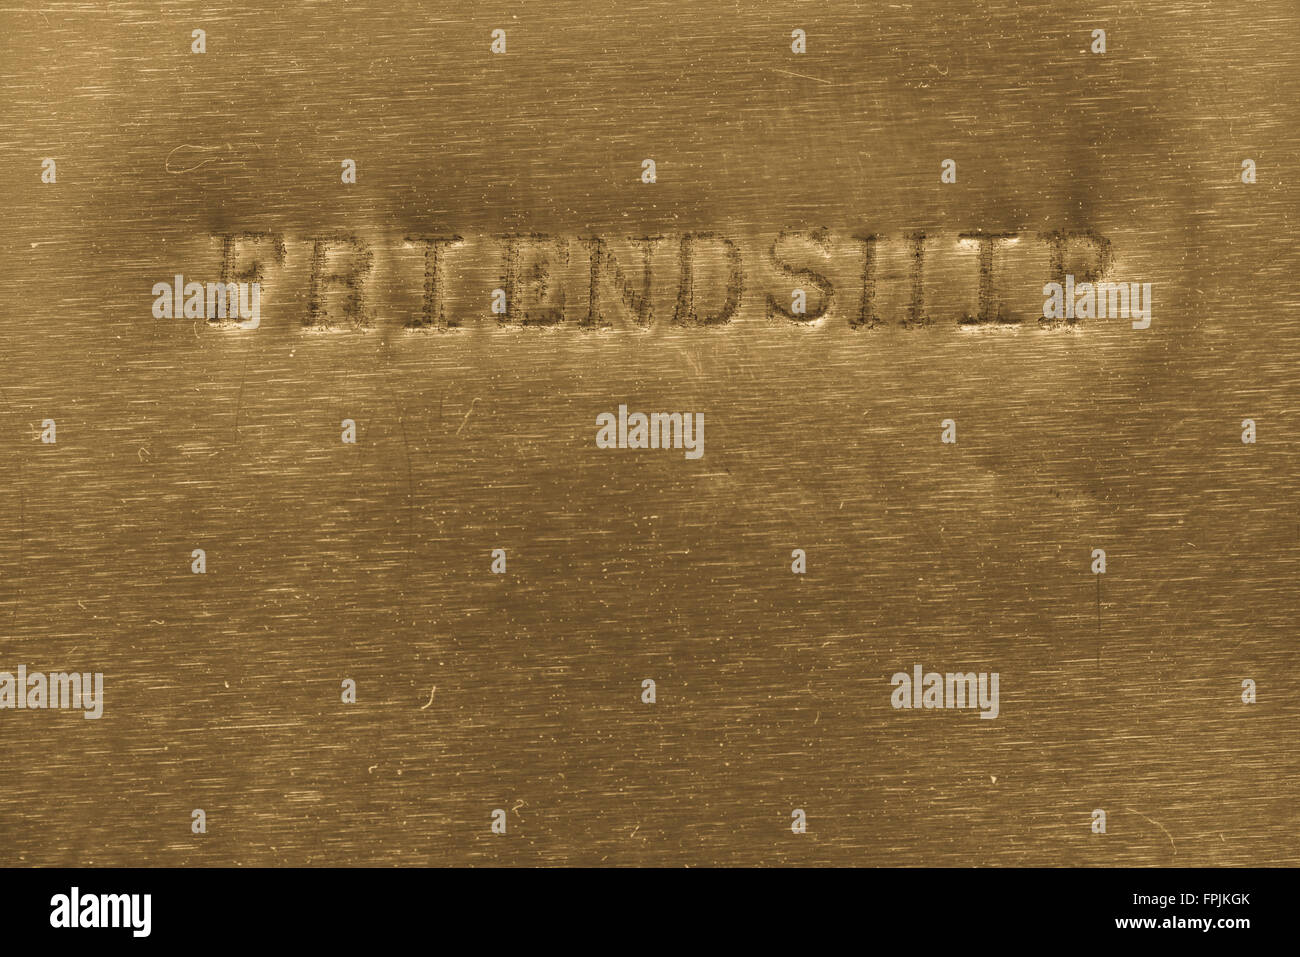 word friendship printed on golden metallic background Stock Photo